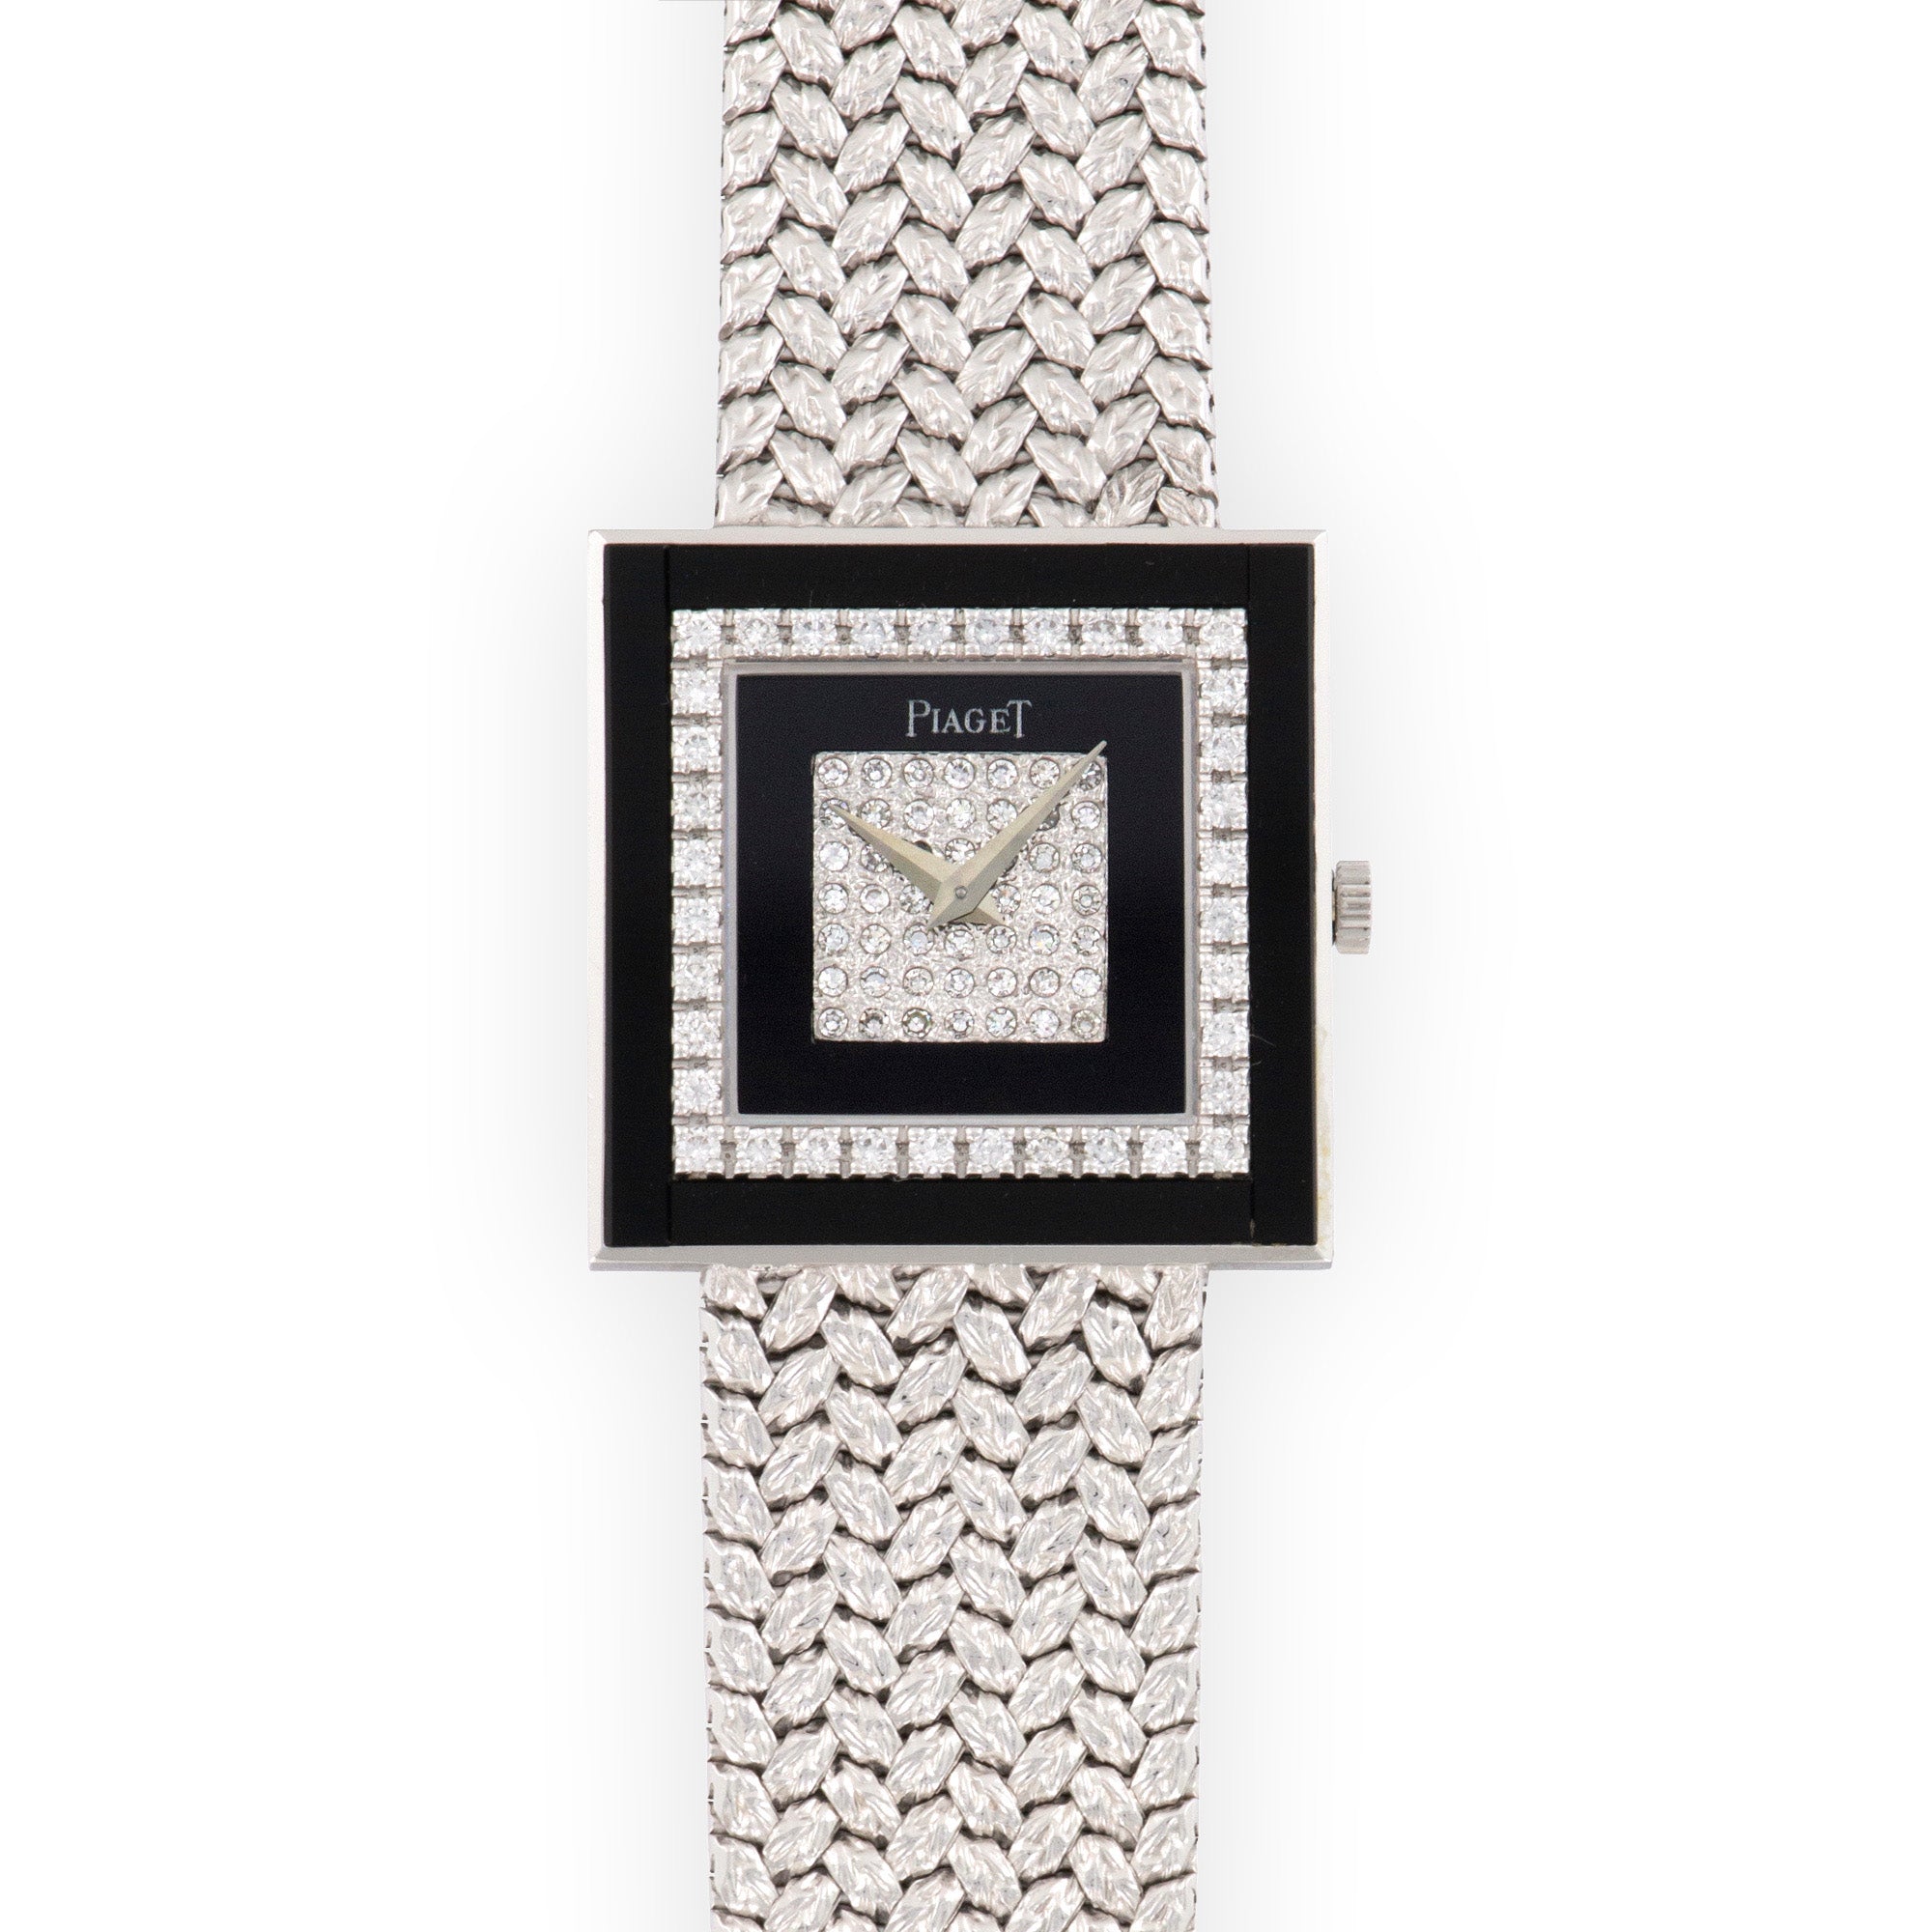 Piaget - Piaget White Gold Diamond & Onyx Watch - The Keystone Watches